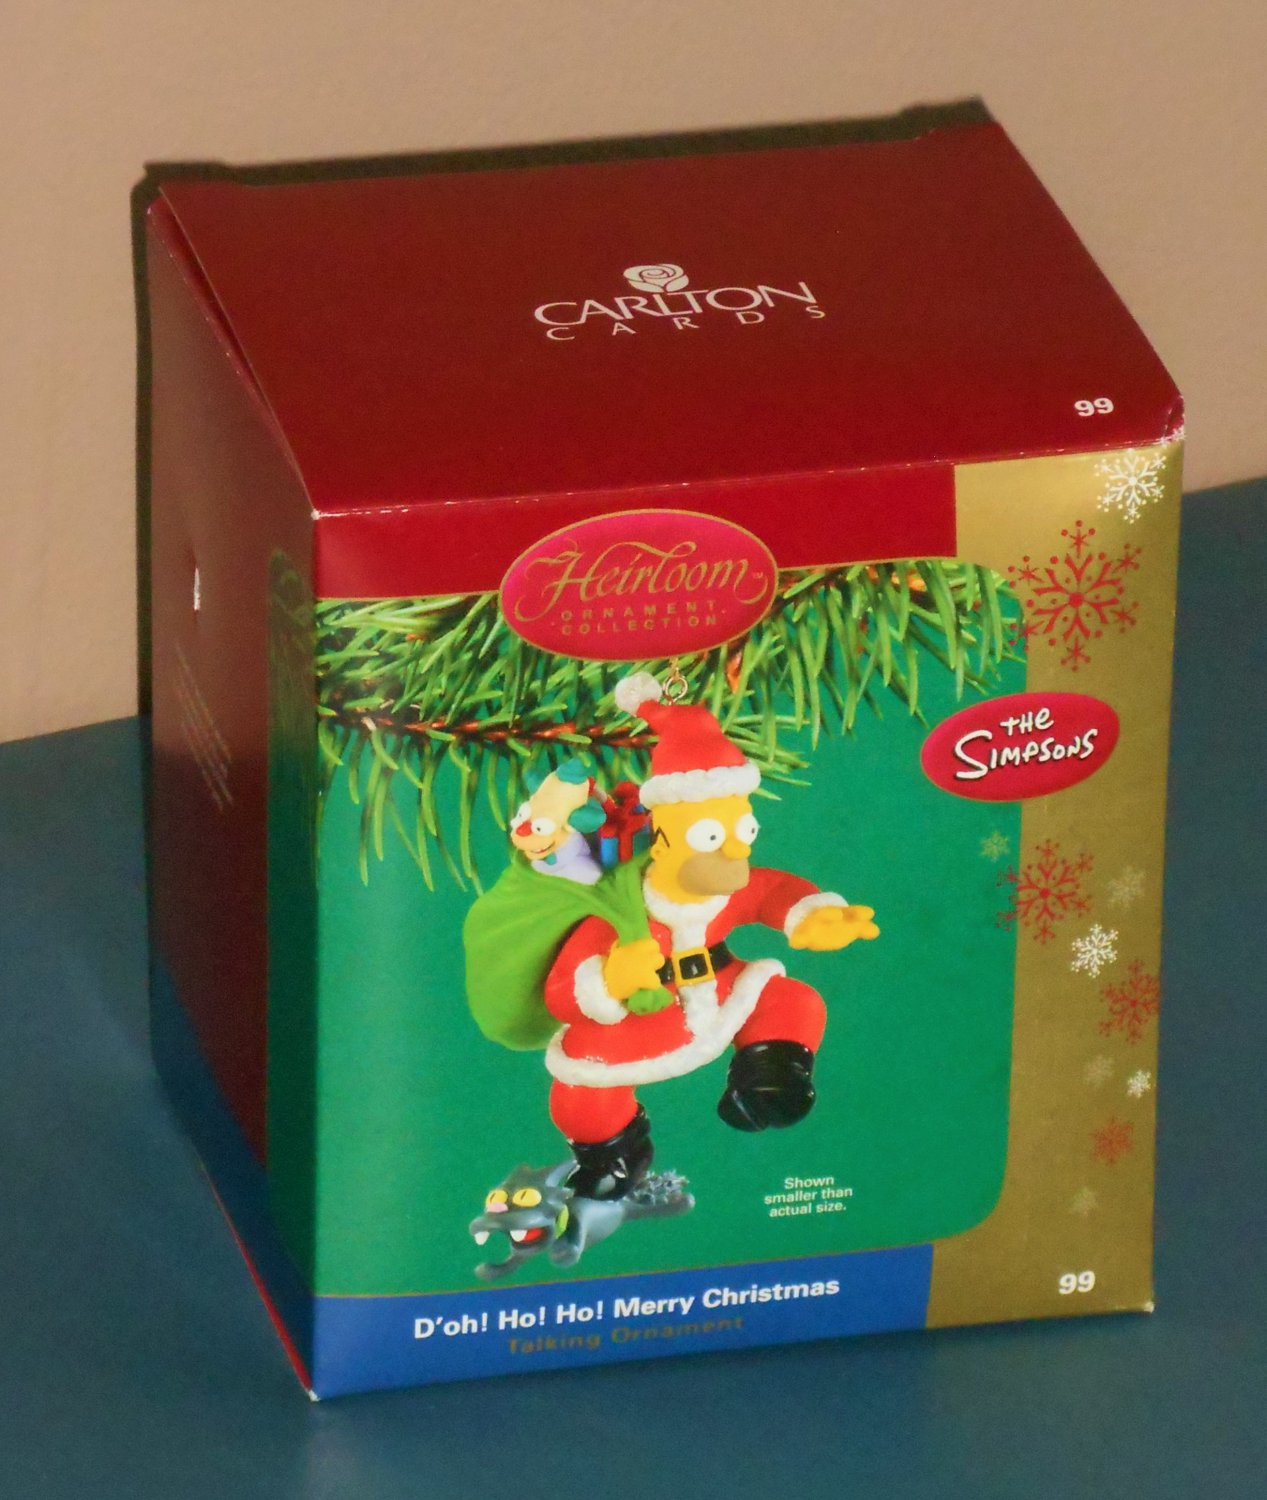 D'oh! Ho! Ho! Merry Christmas Homer Simpson Talking Ornament Carlton Heirloom Collection 99 2004 NIB